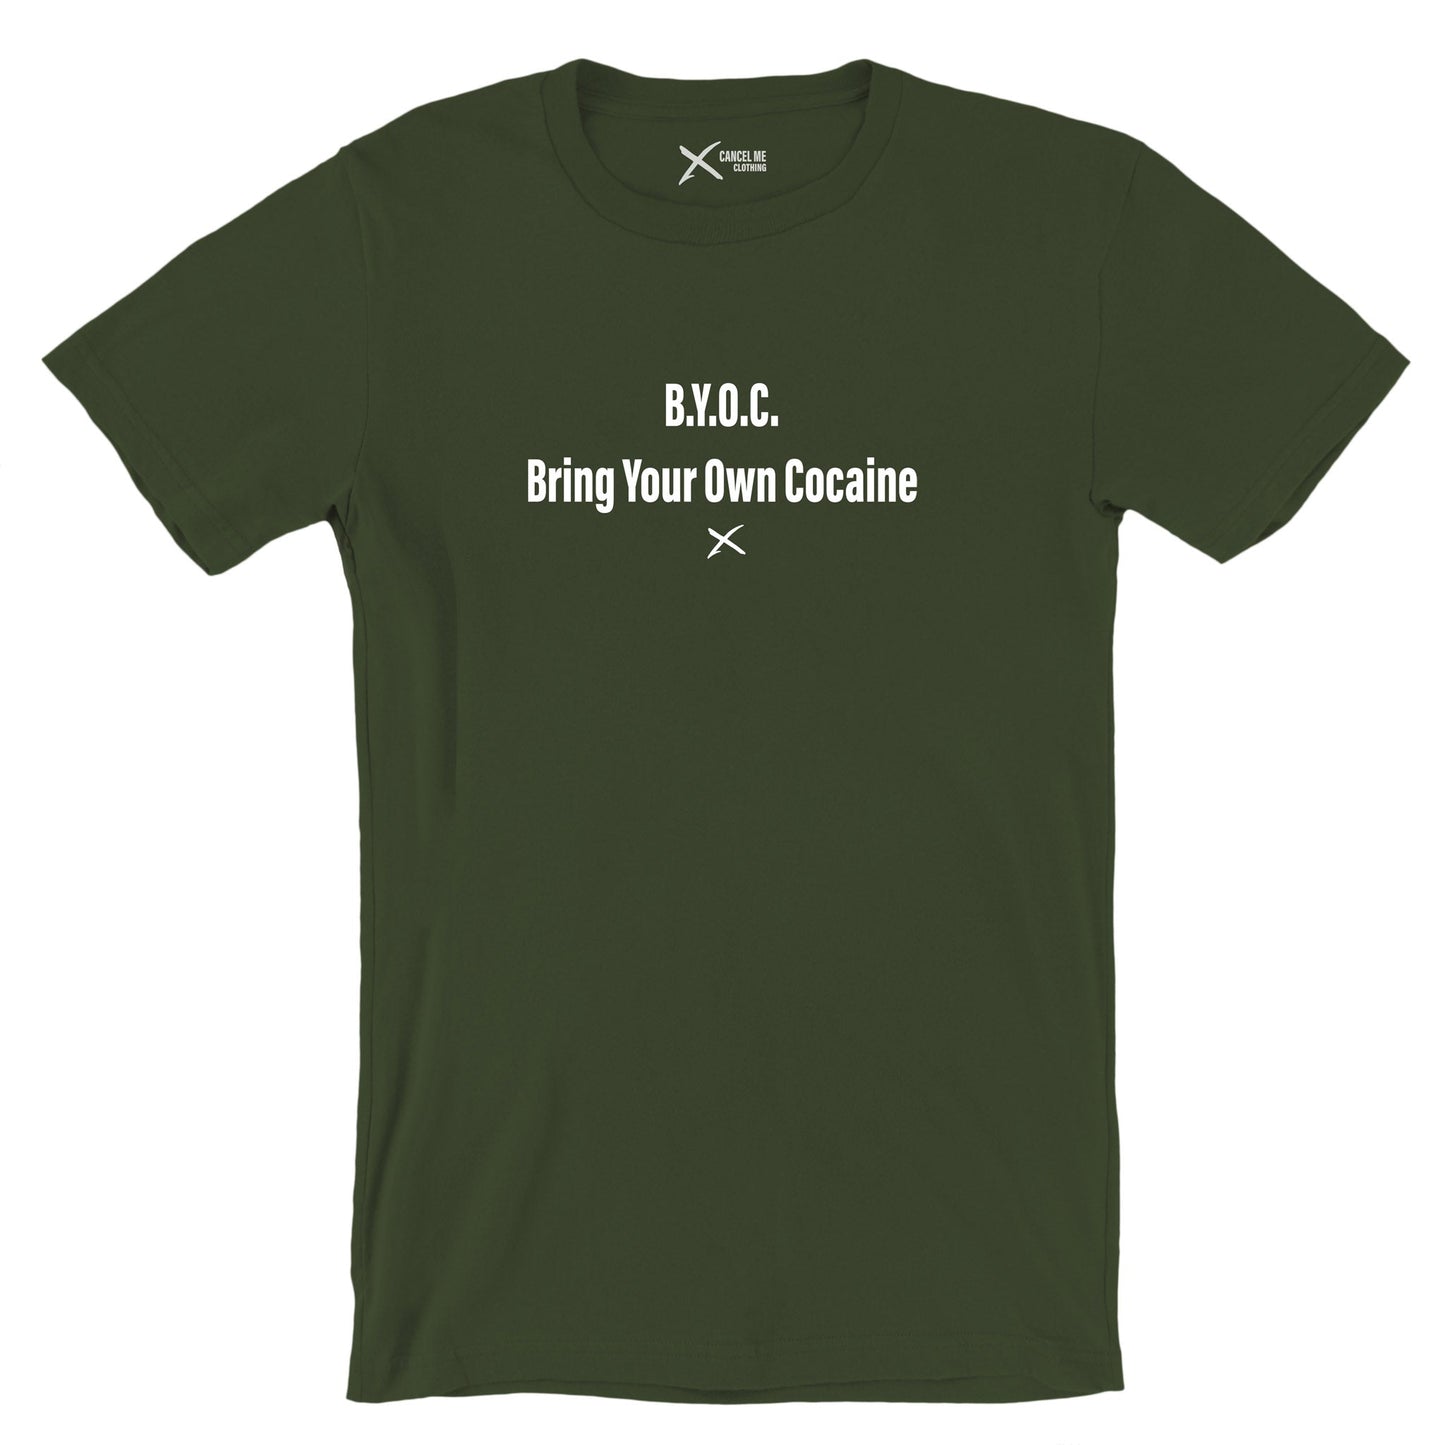 B.Y.O.C. Bring Your Own Cocaine - Shirt